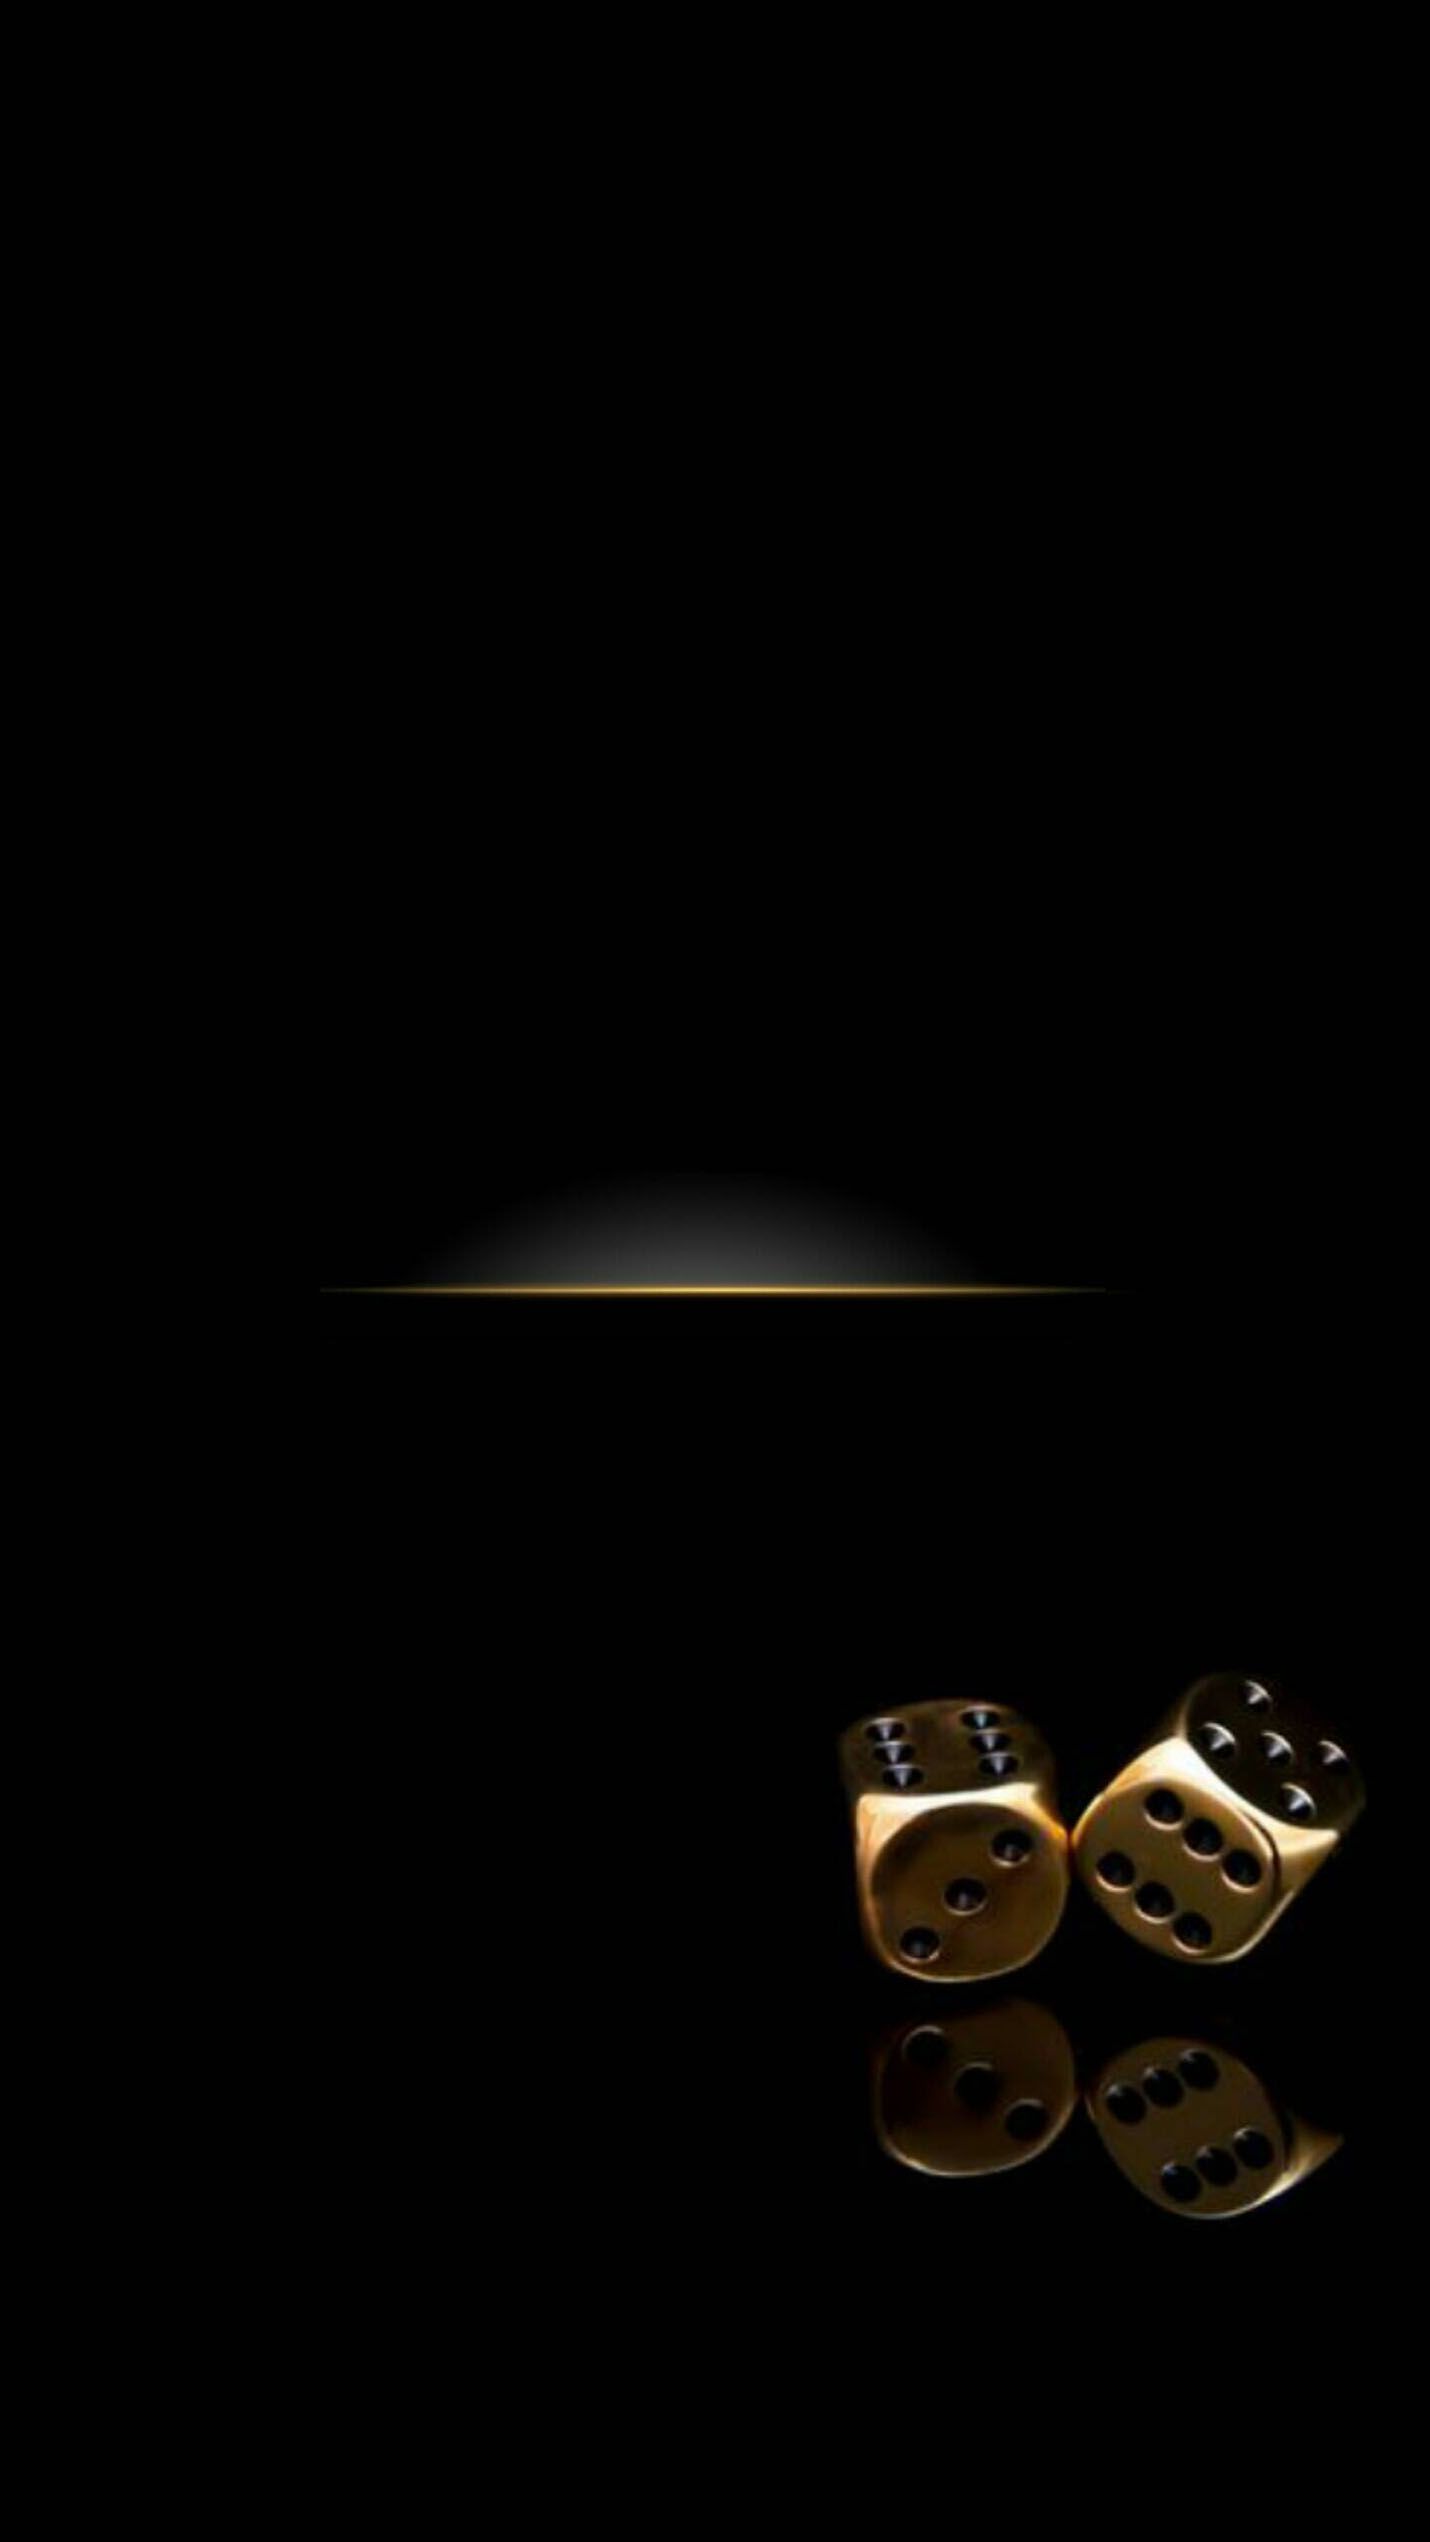 Hintergrundbild Schwarz Gold 1430x2542 Wallpaper Teahub Io